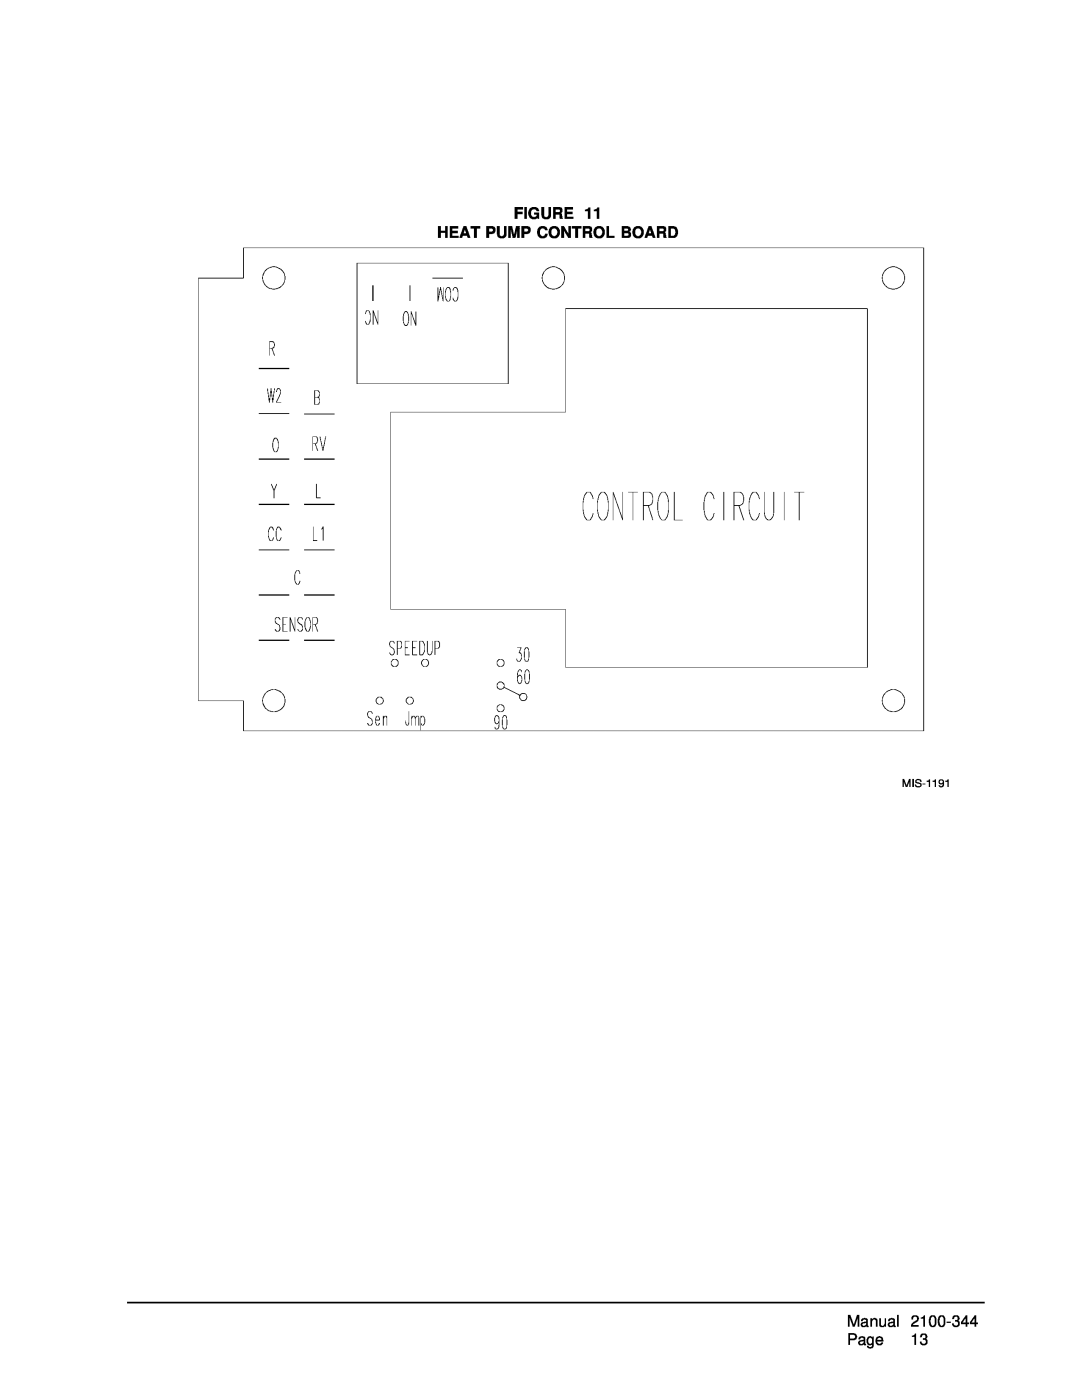 Bard PH1230, PH1236, PH1224 installation instructions Figure Heat Pump Control Board, MIS-1191 